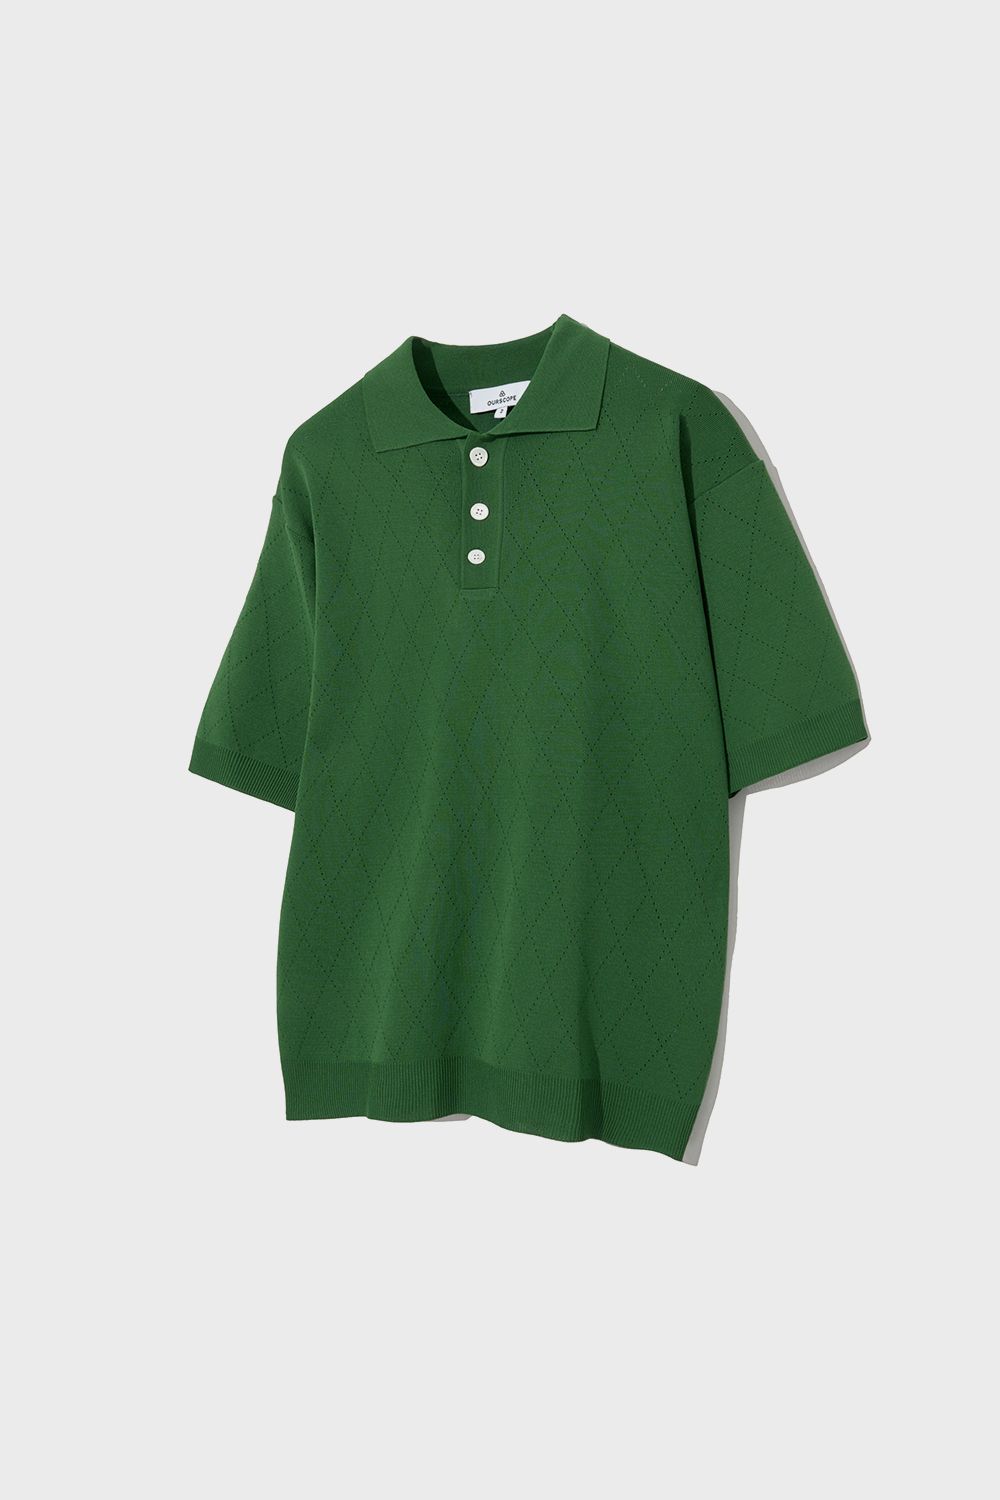 Lozenge Half Knit (Green)